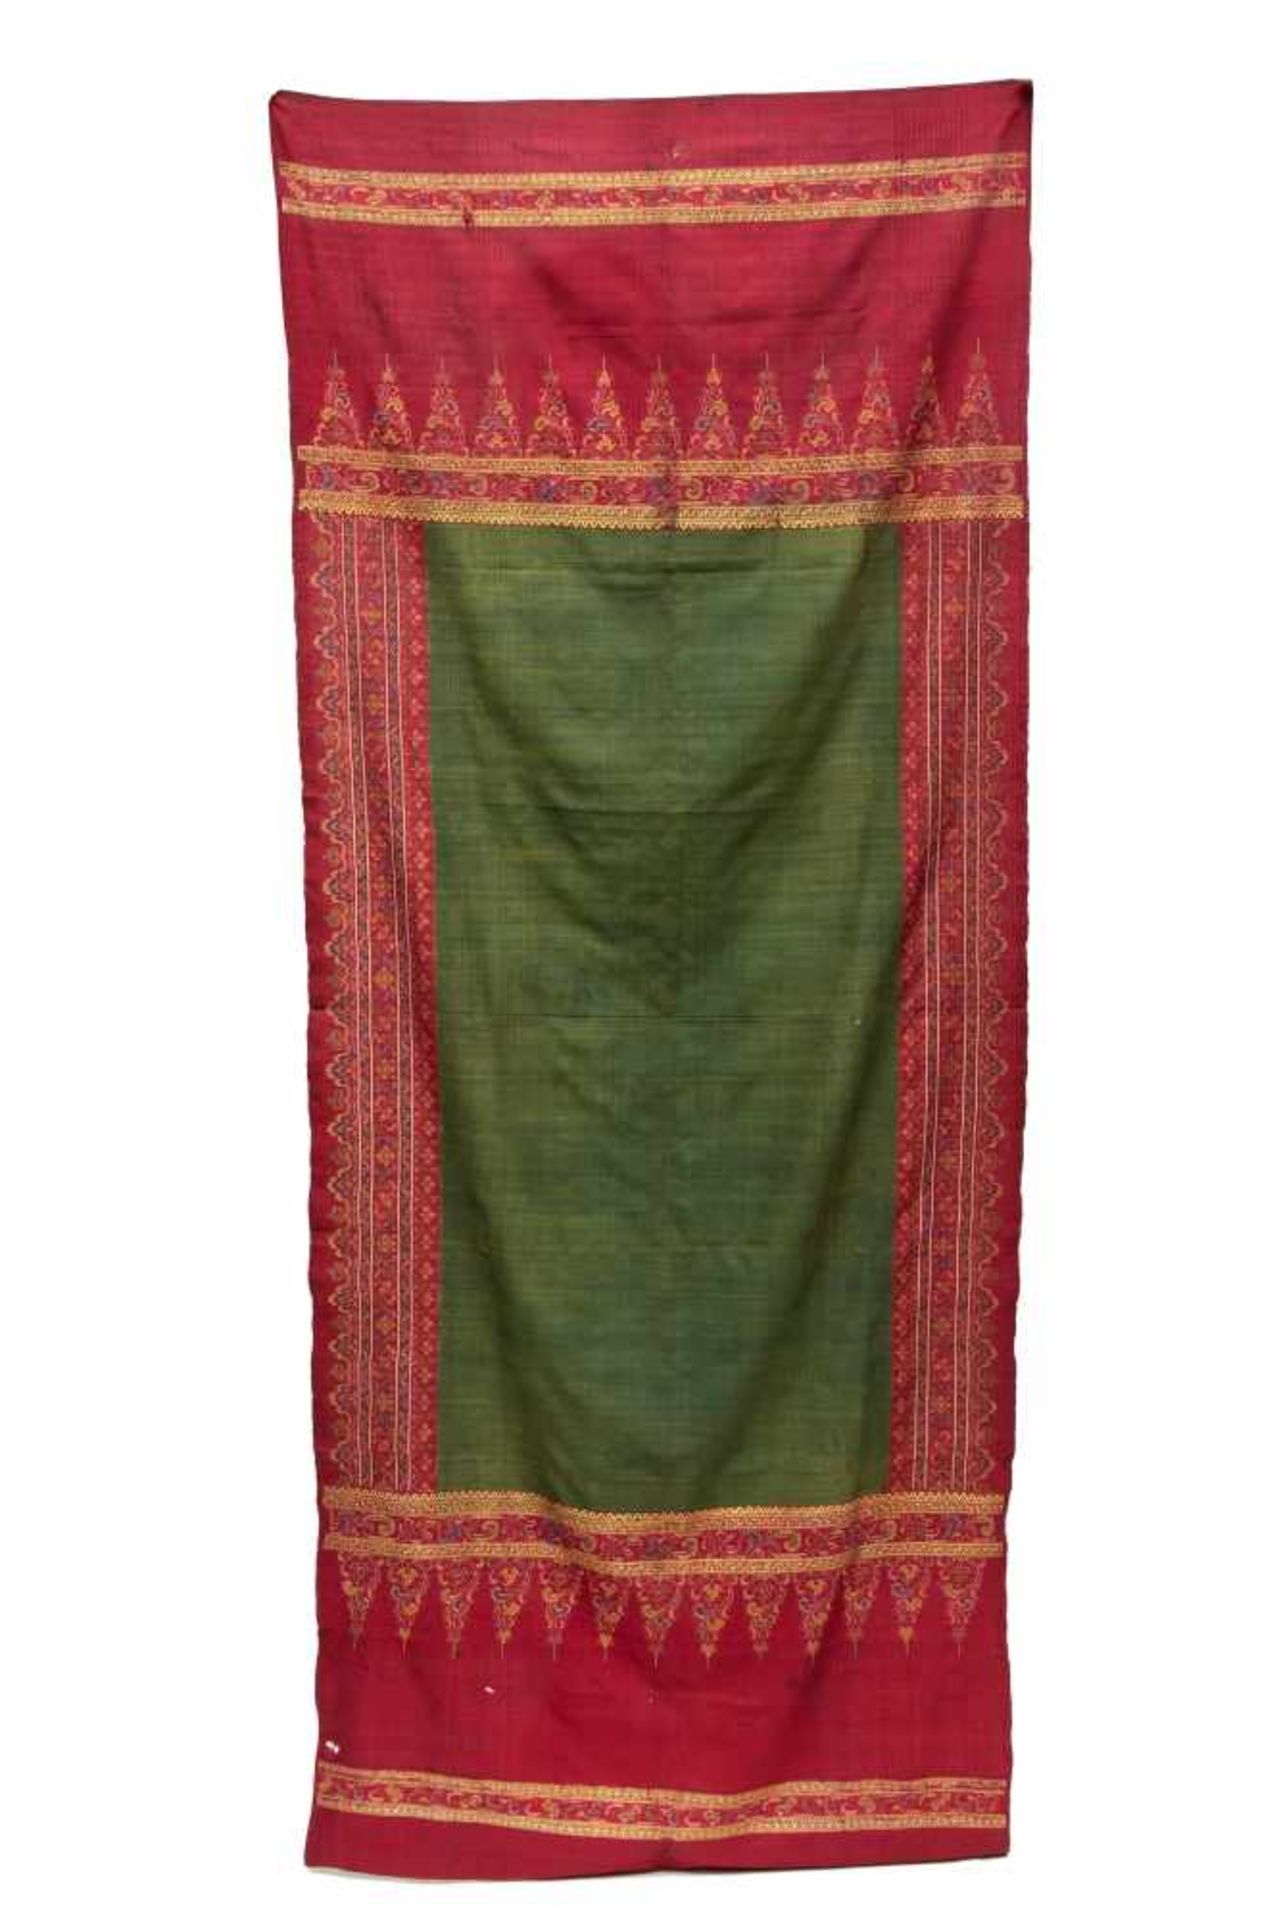 Indonesia, Sumatra, Palembang, ceremonial silk lady Ikat, ‘kain limar’, ca. 1900.A one piece silk